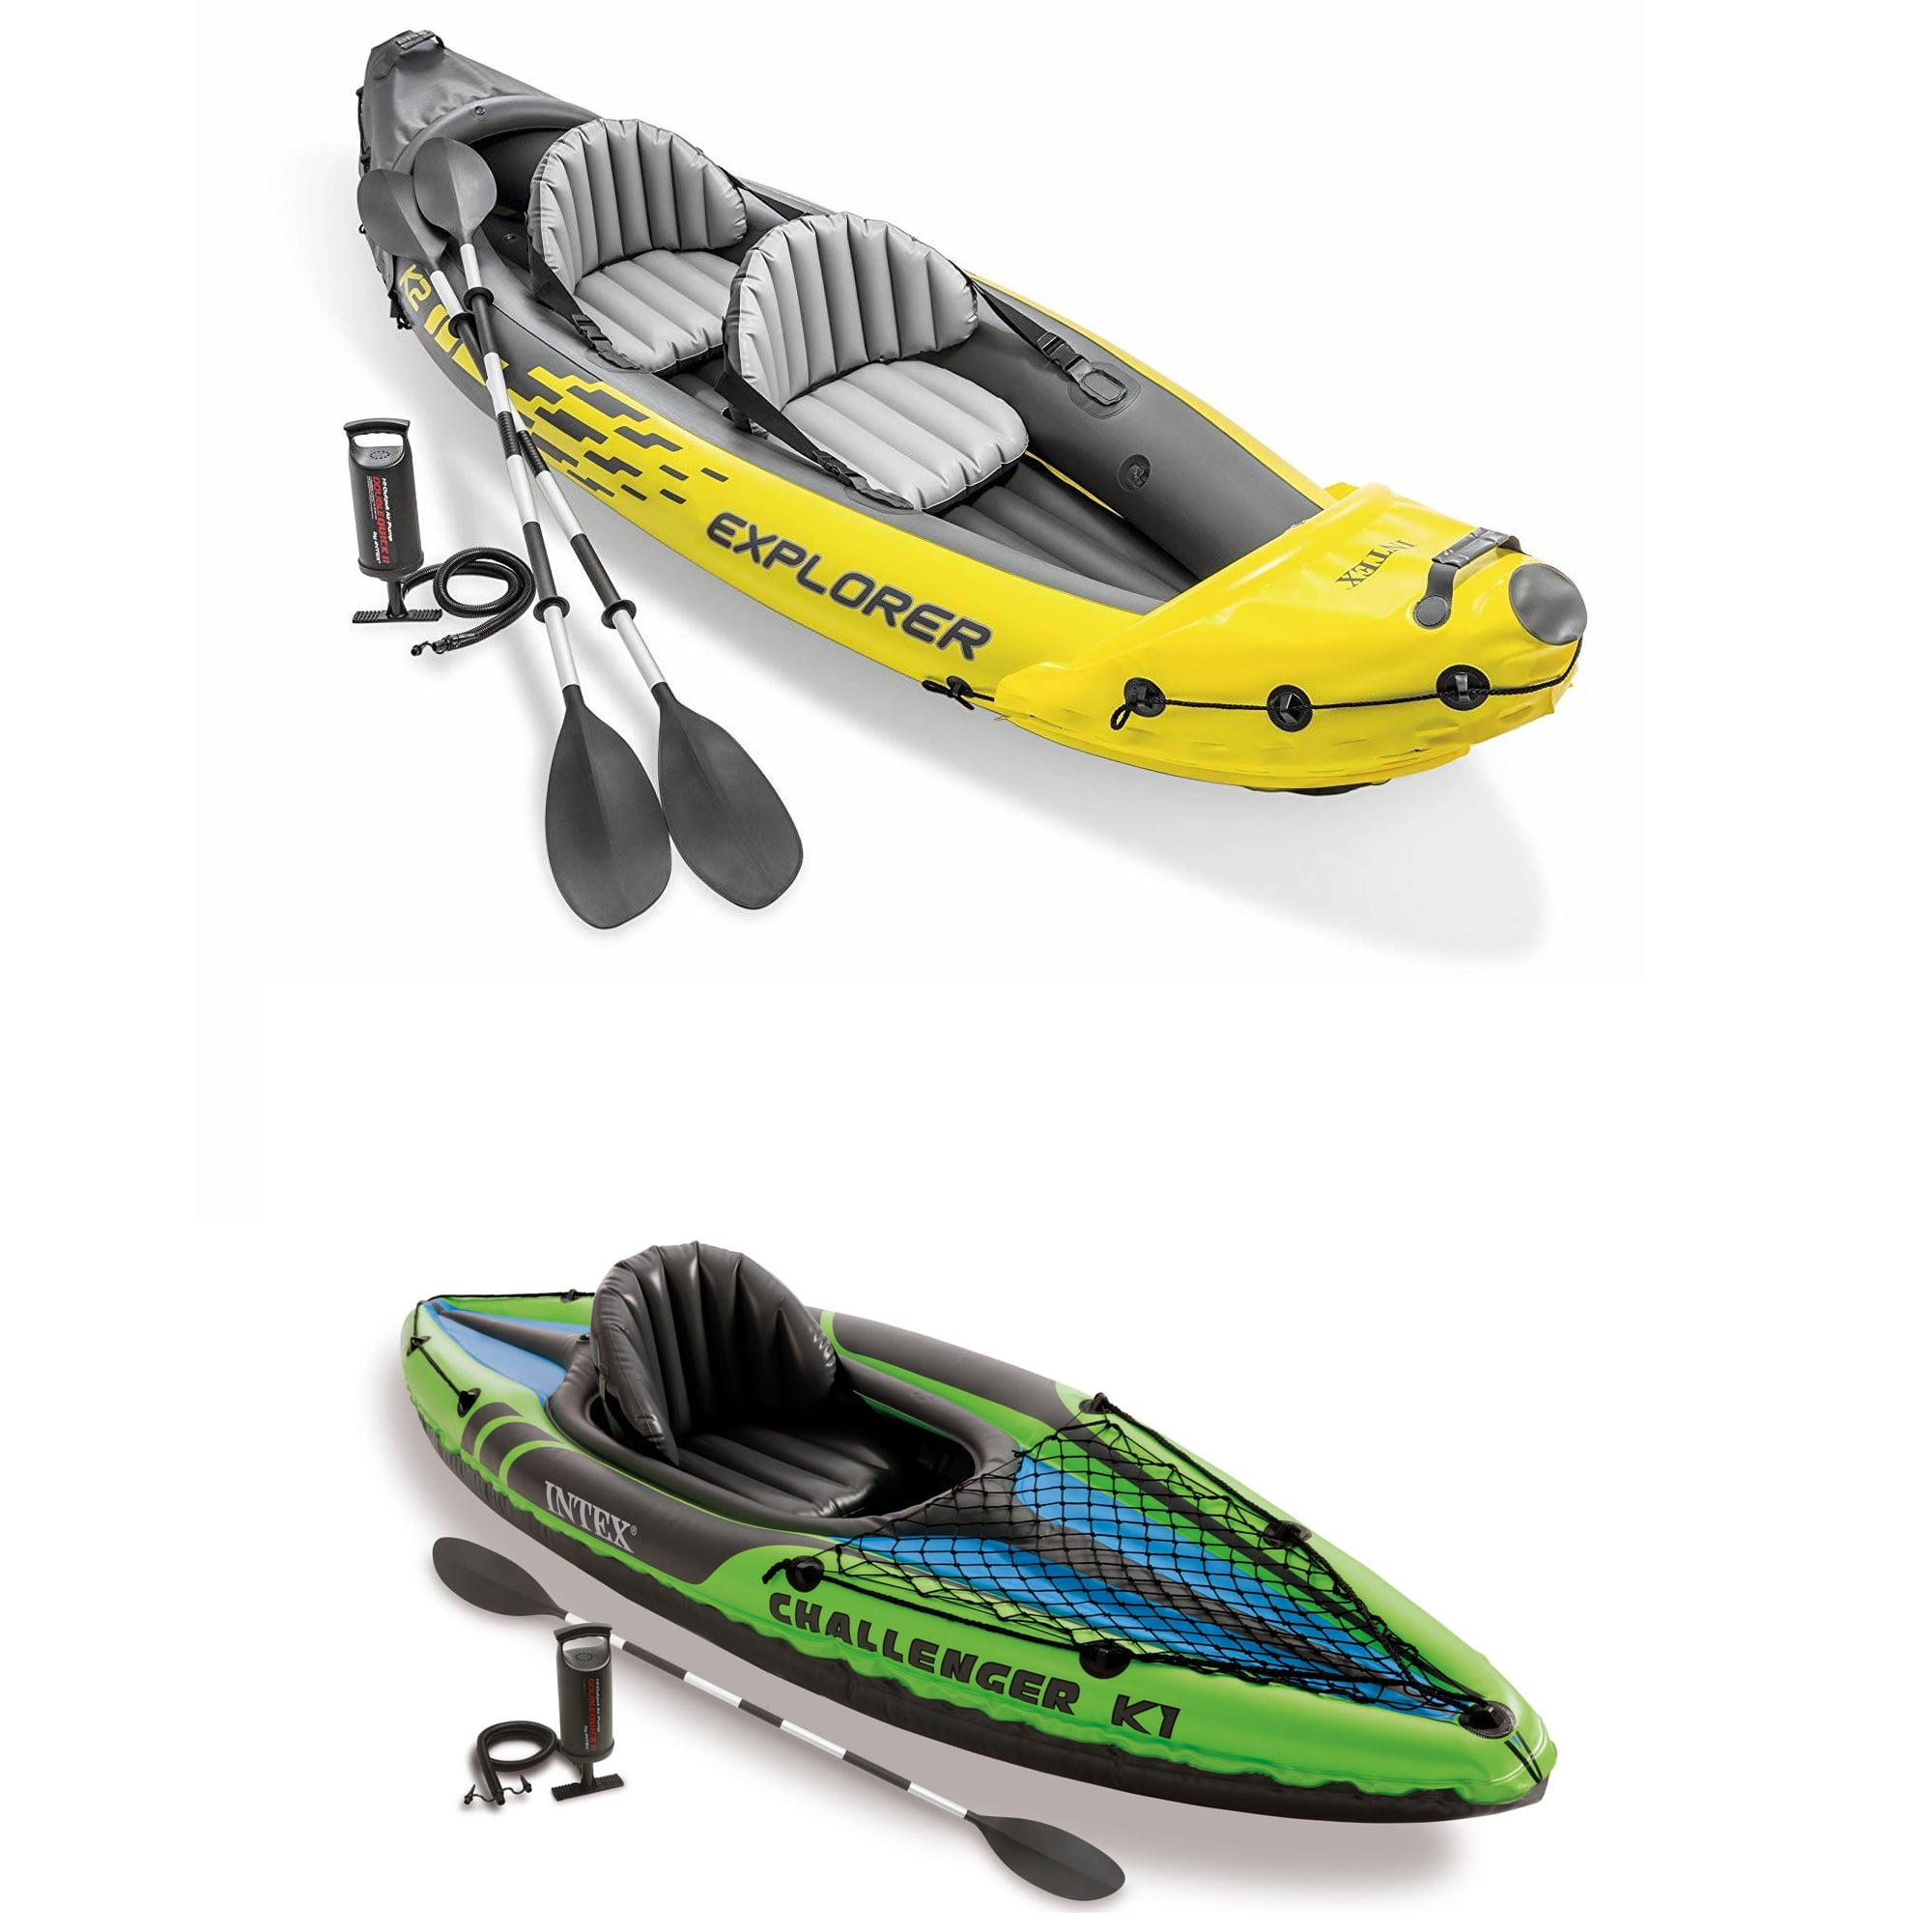 Intex Excursion Pro K1 Single Person Inflatable Vinyl Fishing Kayak w/ Oar/Pump 